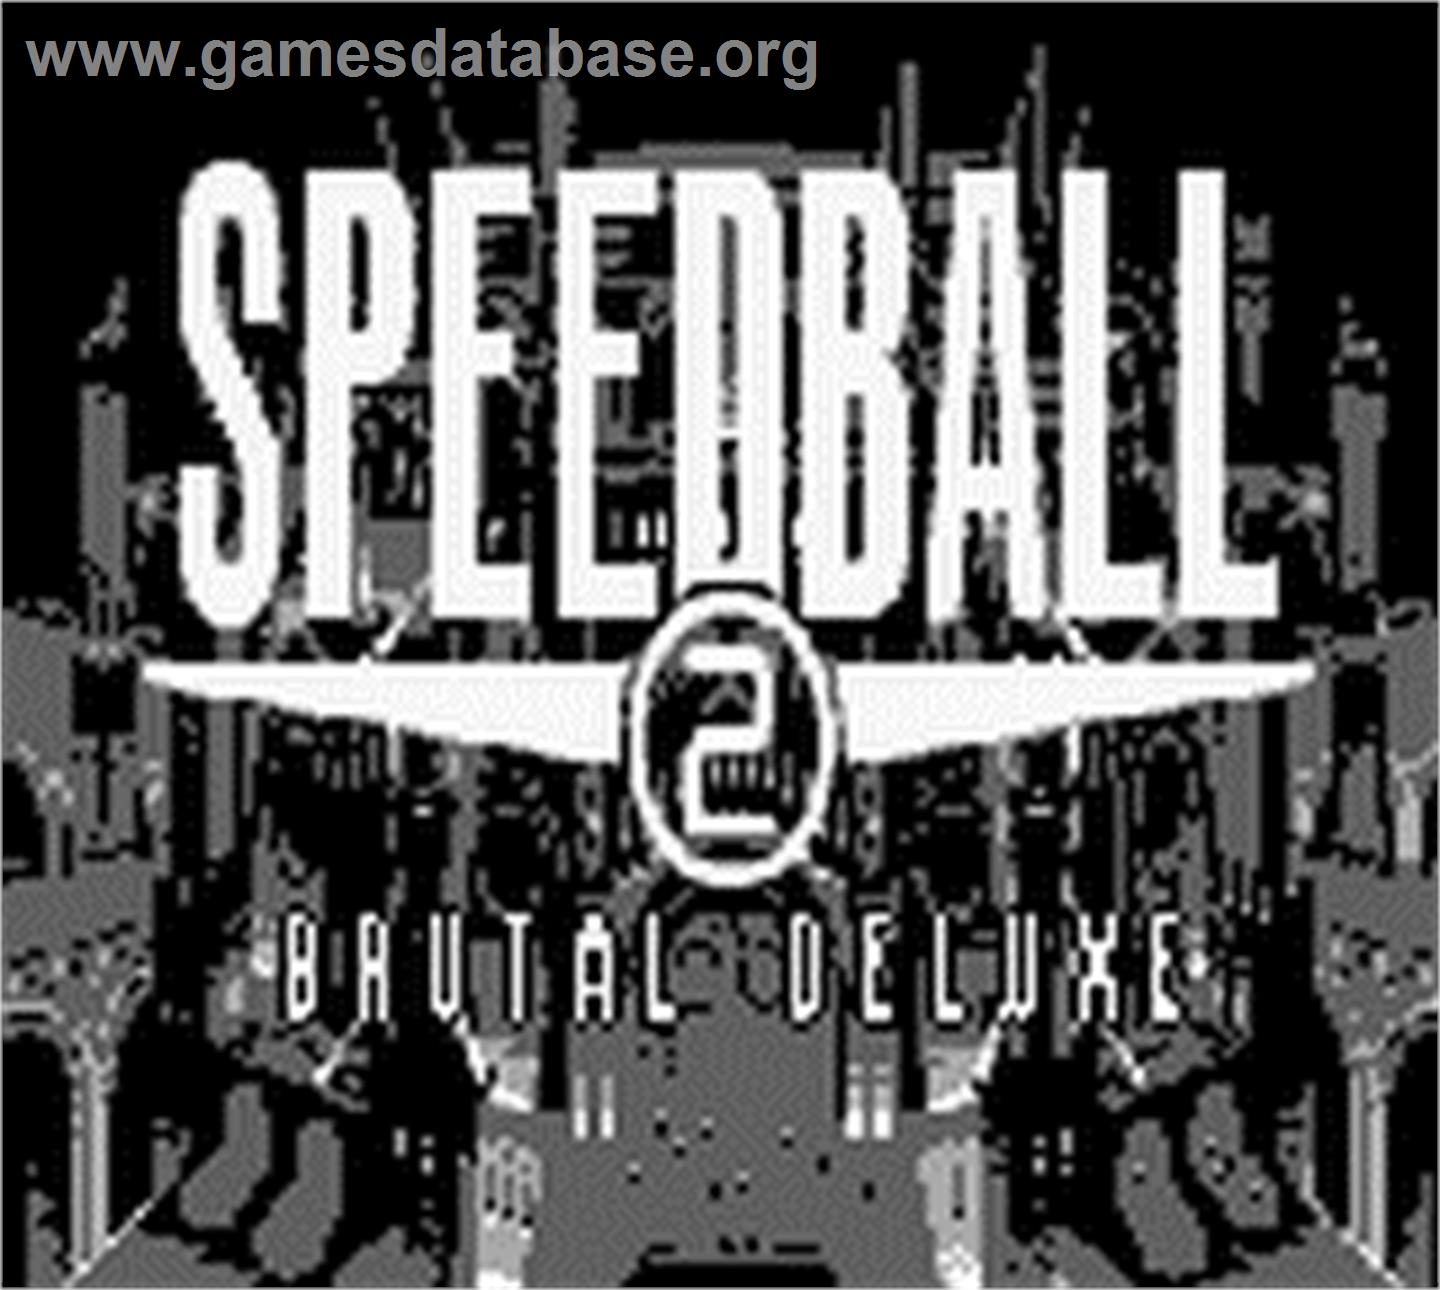 Speedball 2: Brutal Deluxe - Nintendo Game Boy - Artwork - Title Screen